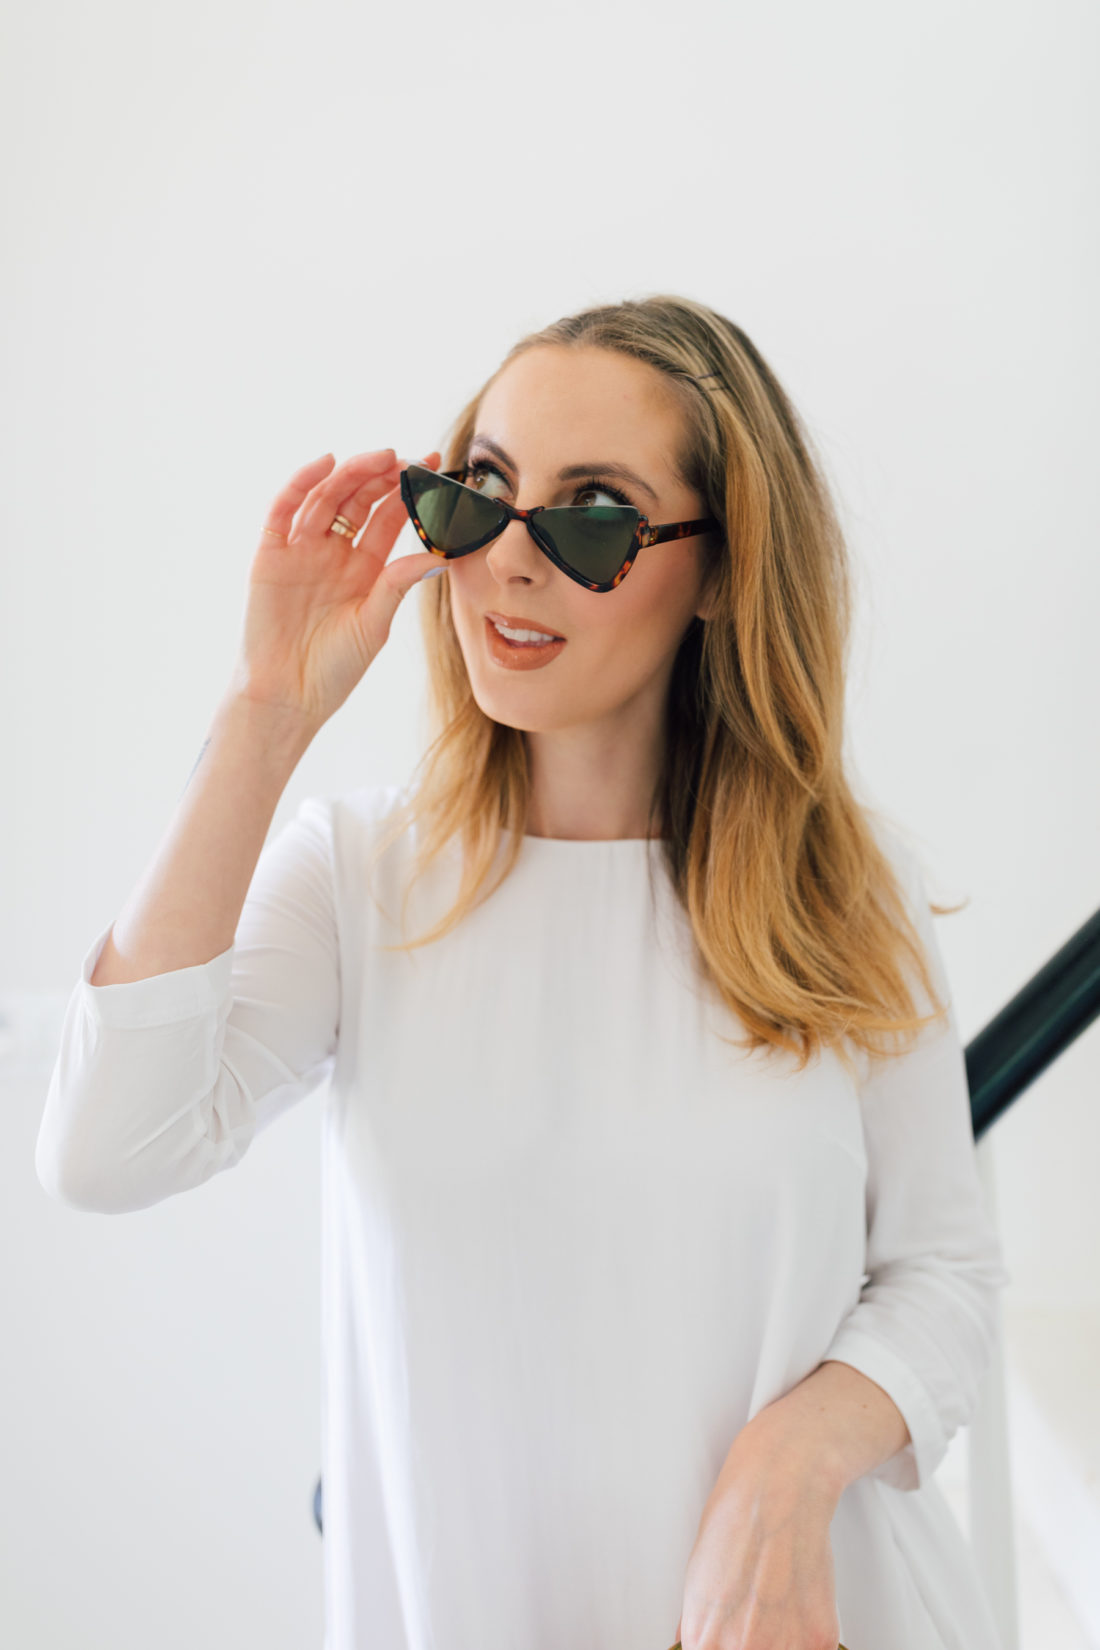 Eva Amurri Martino of Happily Eva After shares her favorite inexpensive summer accessories